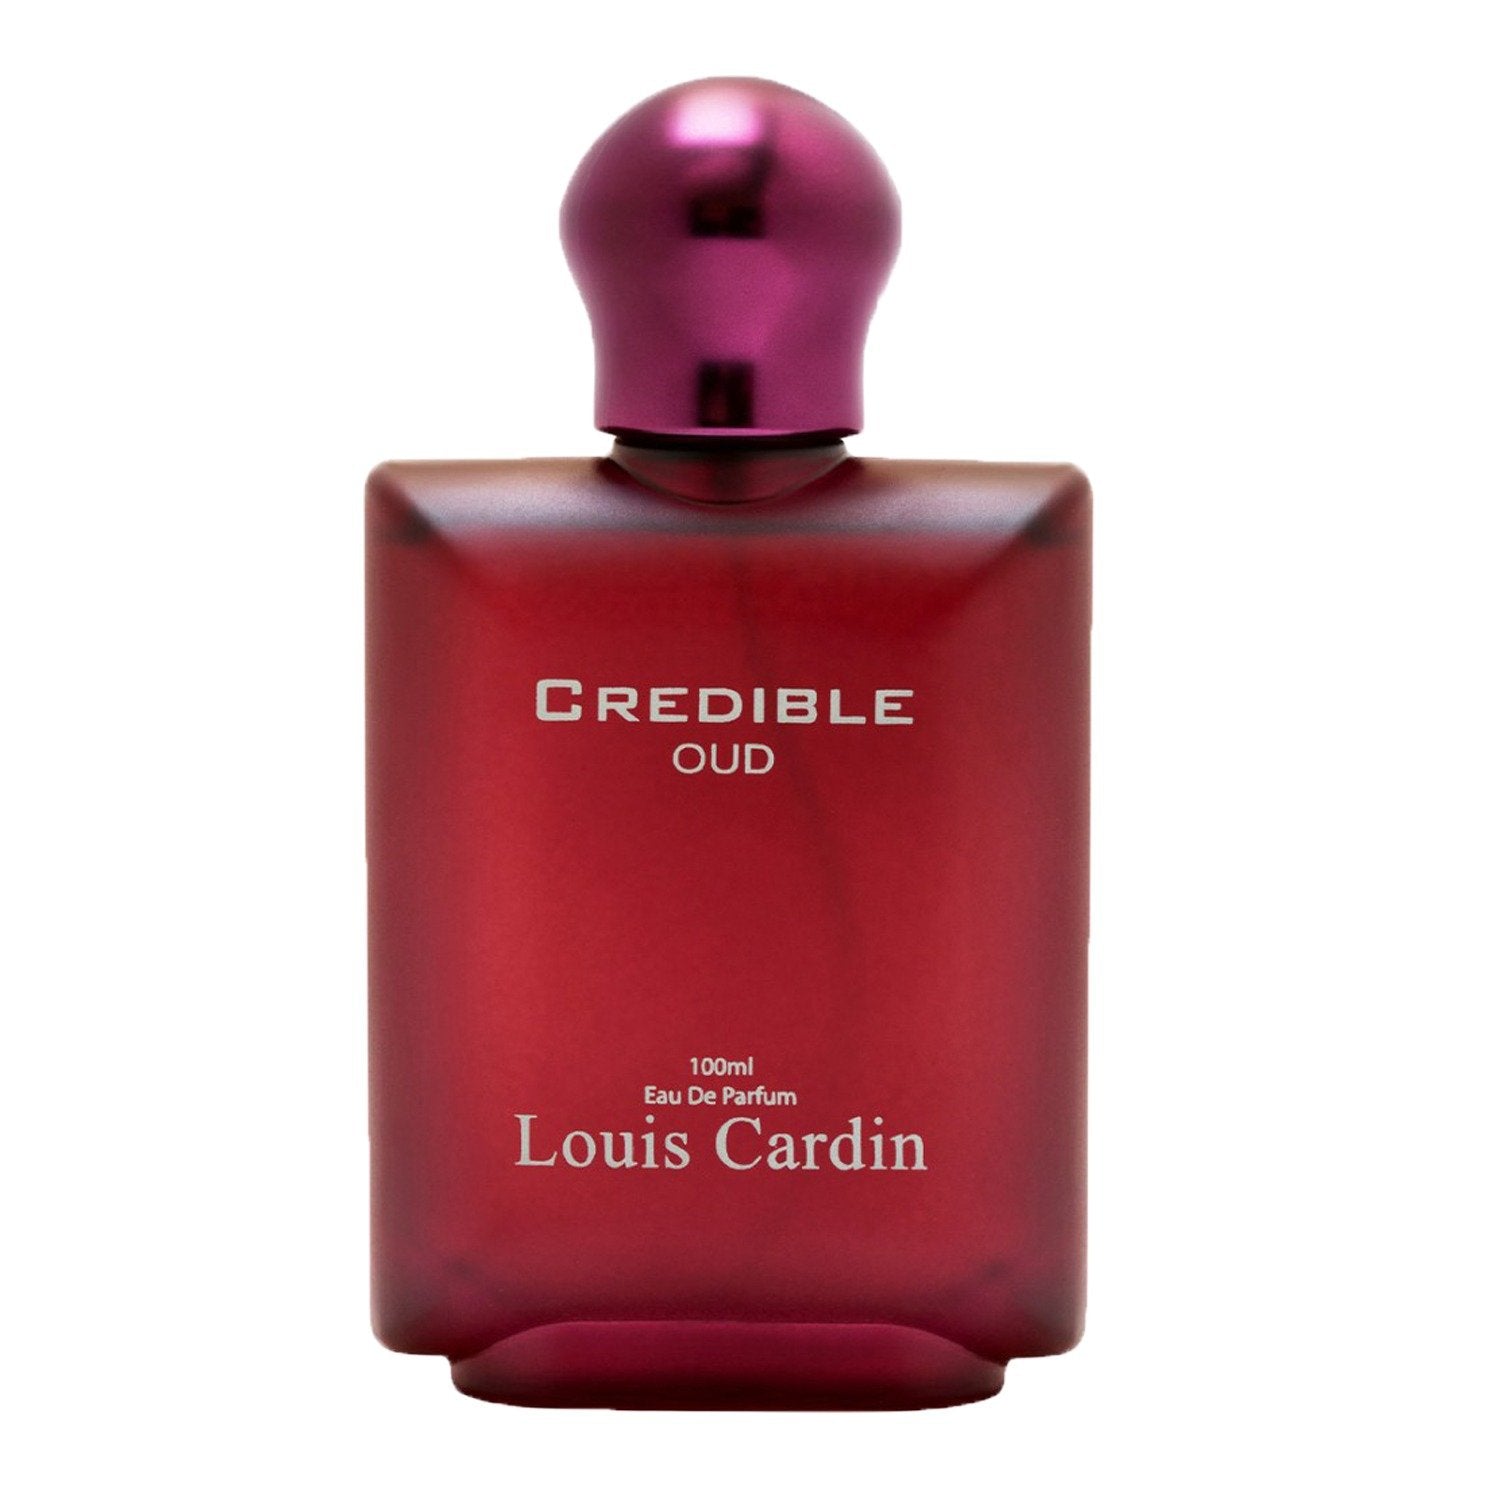 Louis Cardin Credible - Noir EDP For Men 100ml